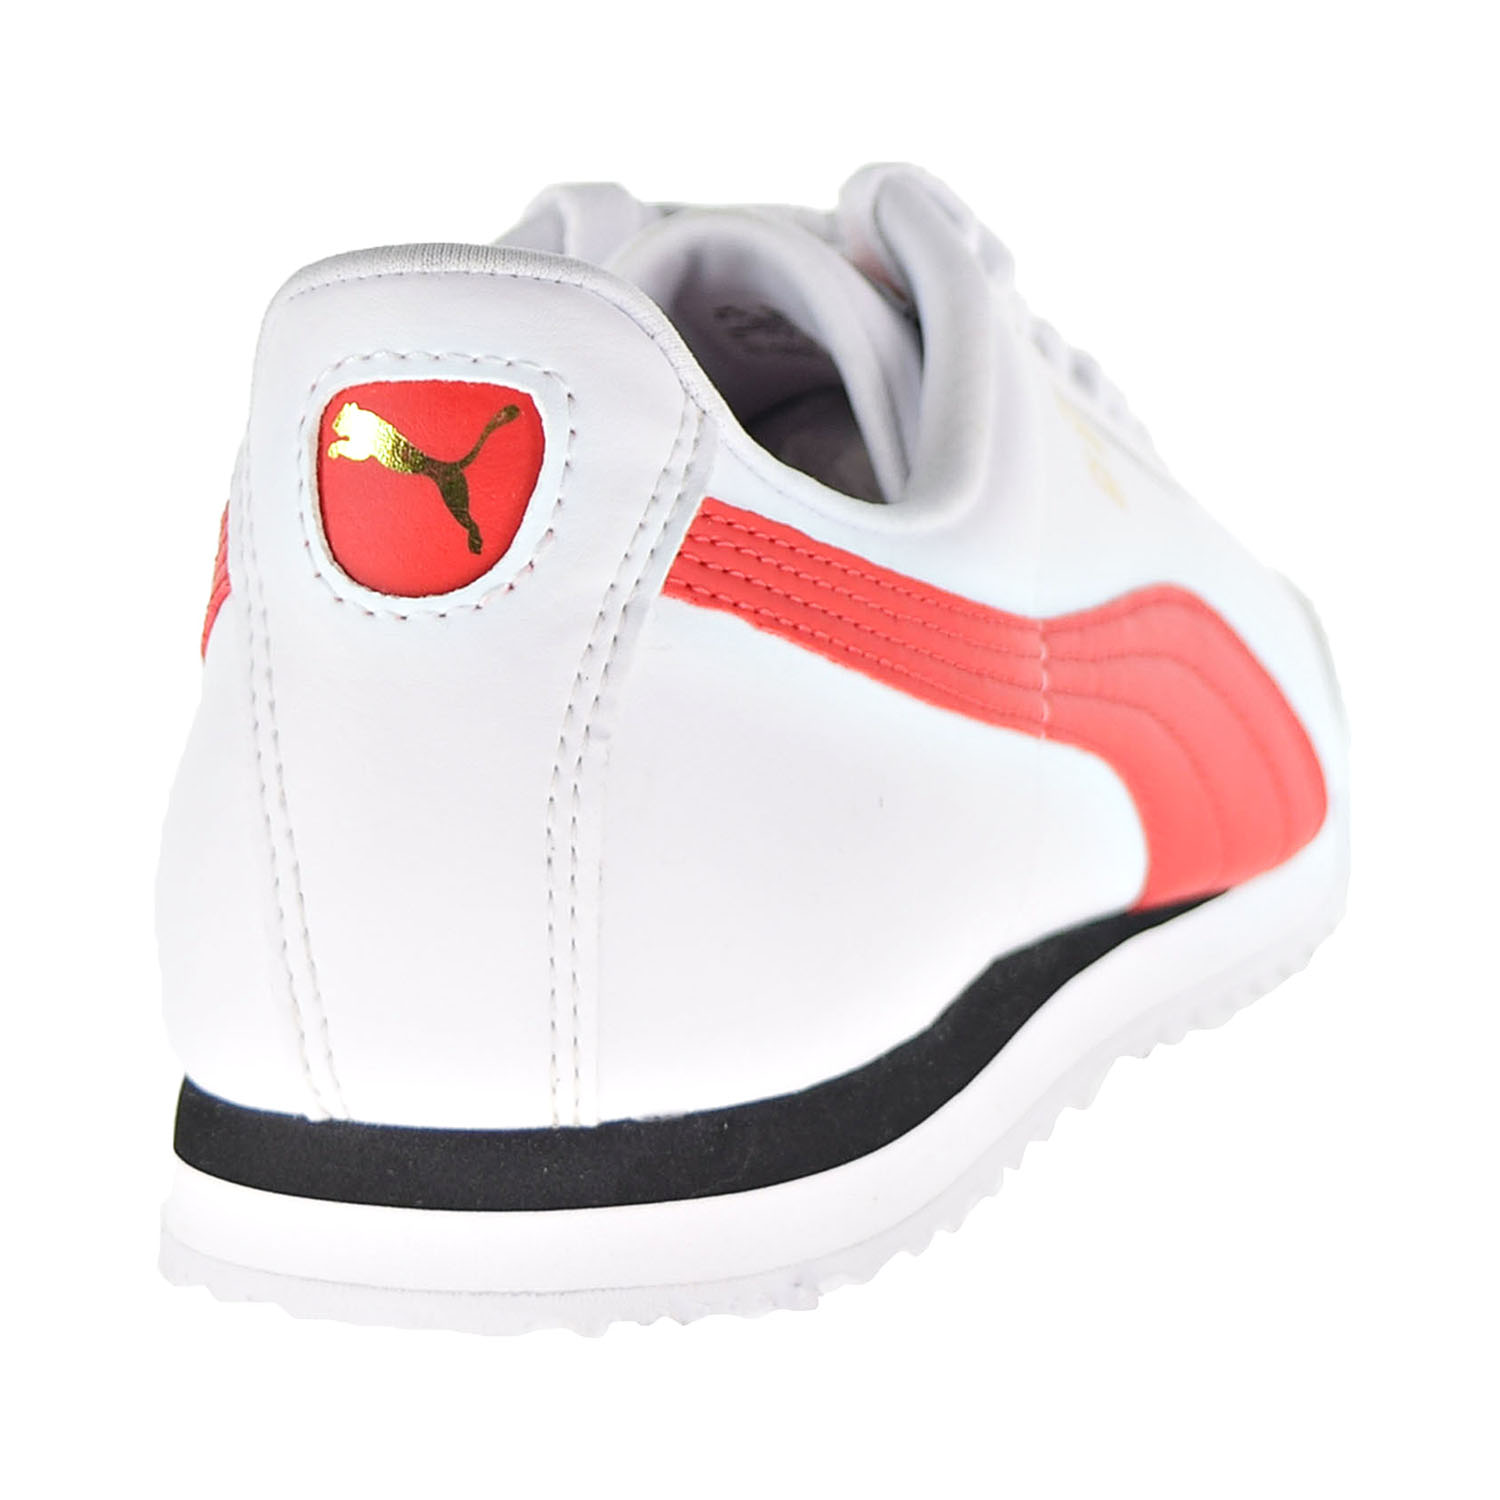 Puma Roma Basic+ Men's Shoes Puma White-High Risk Red 369571-11 - image 3 of 6